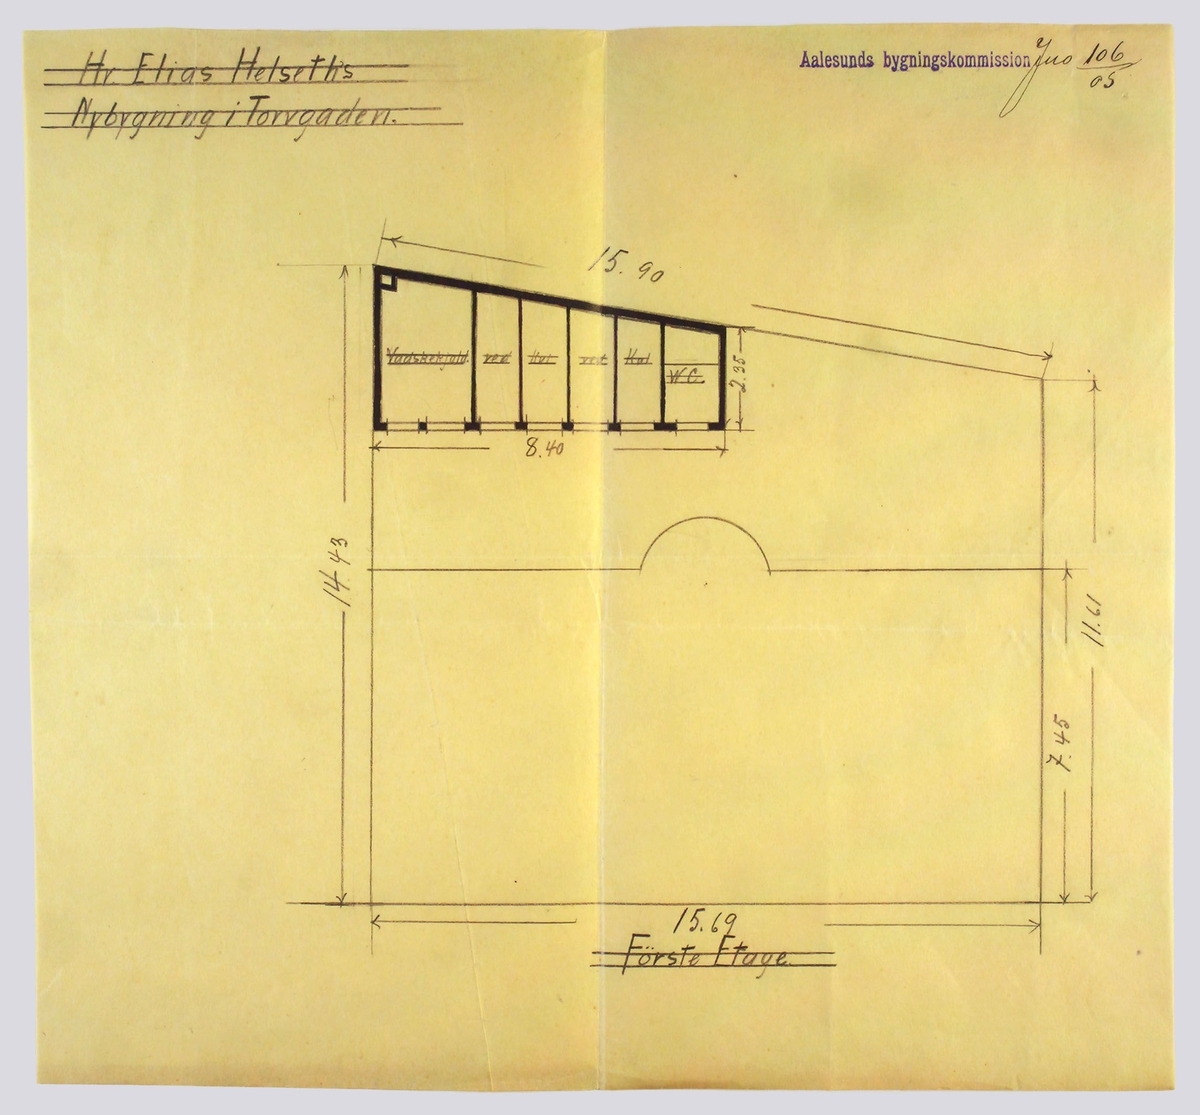 Hr. Elias Helseth's nybygning i Torvgaden [Arbeidstegning]